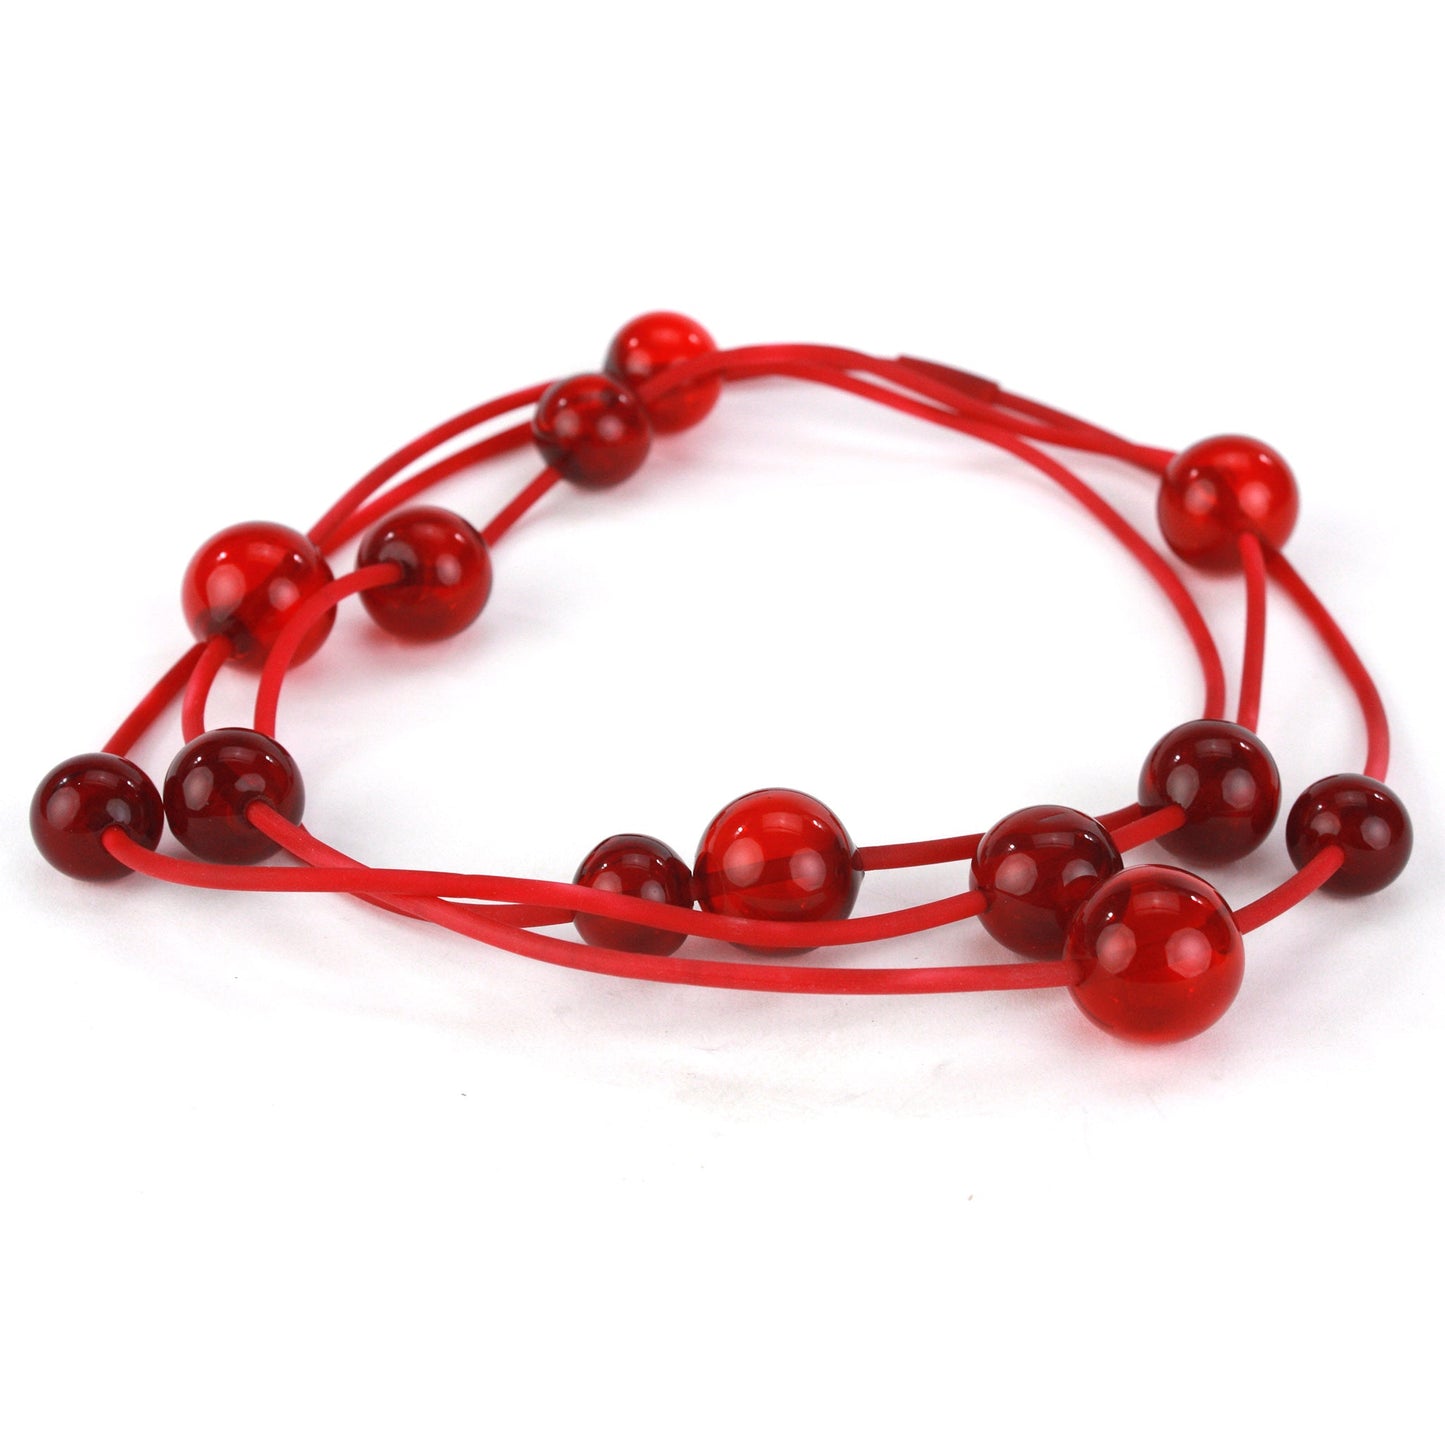 Orbit necklace -red